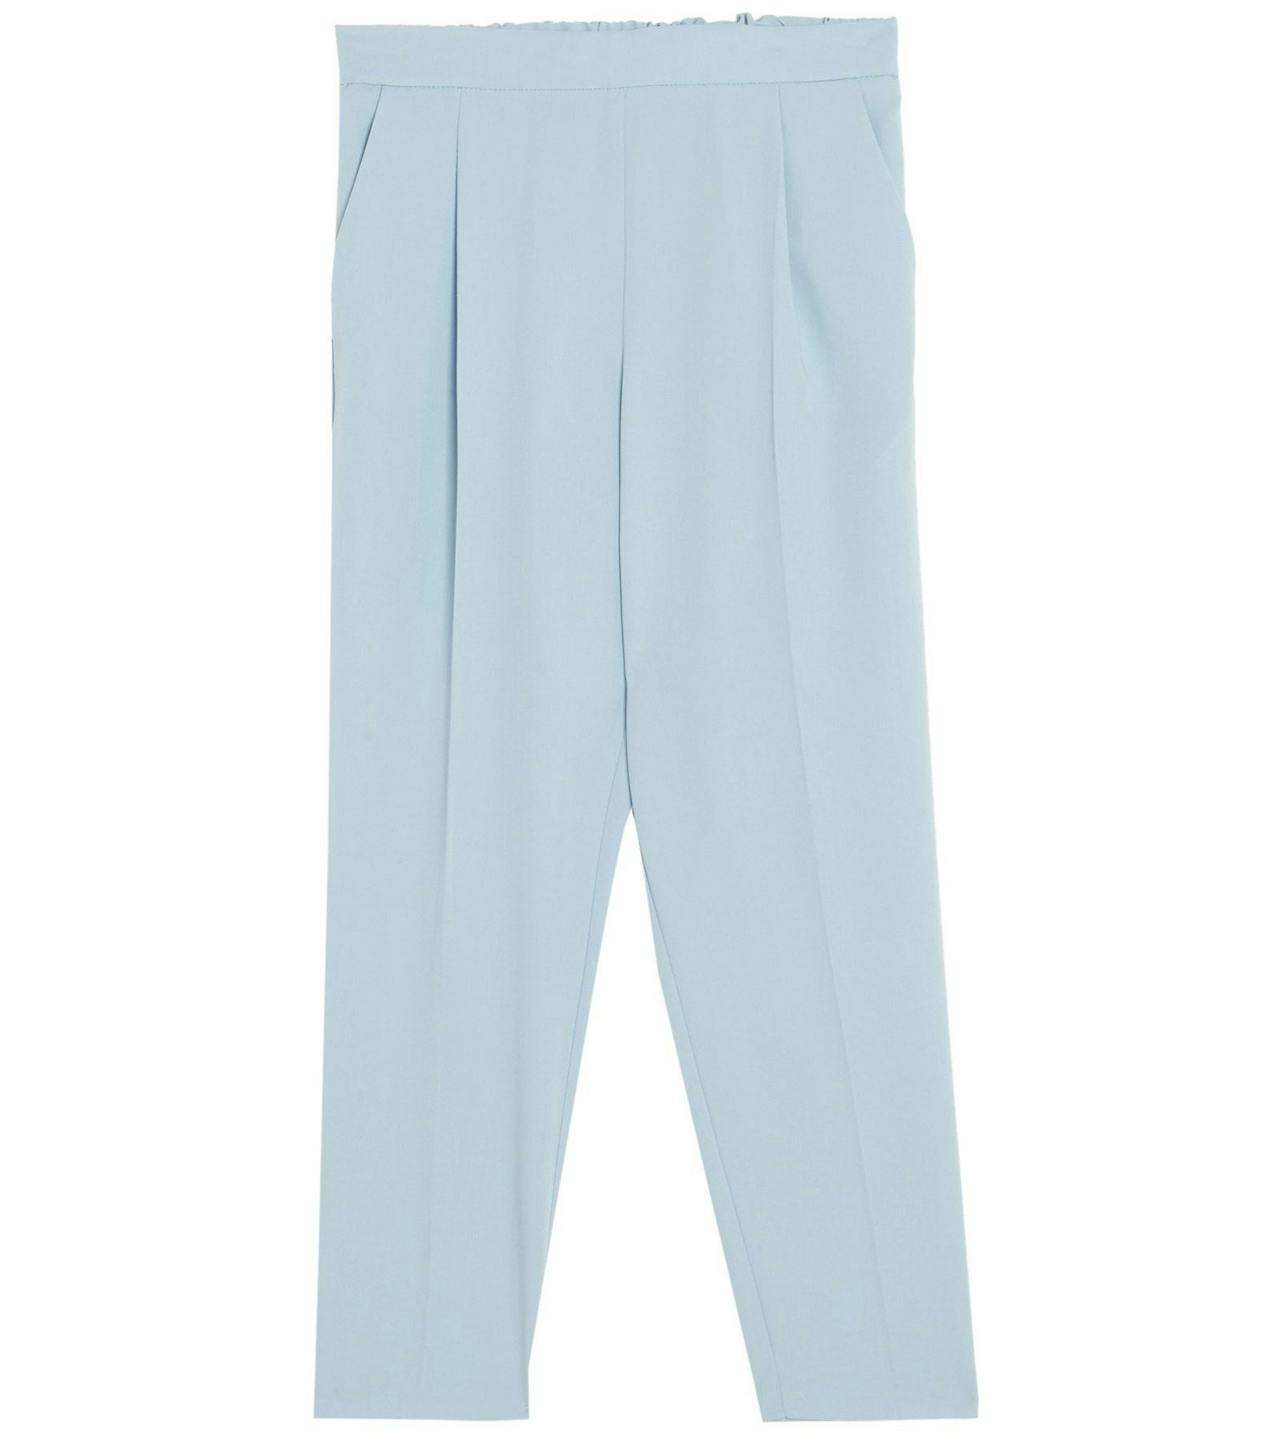 Pantalón jogging básico en color azul pastel de Pull&Bear, por 17,99 euros.